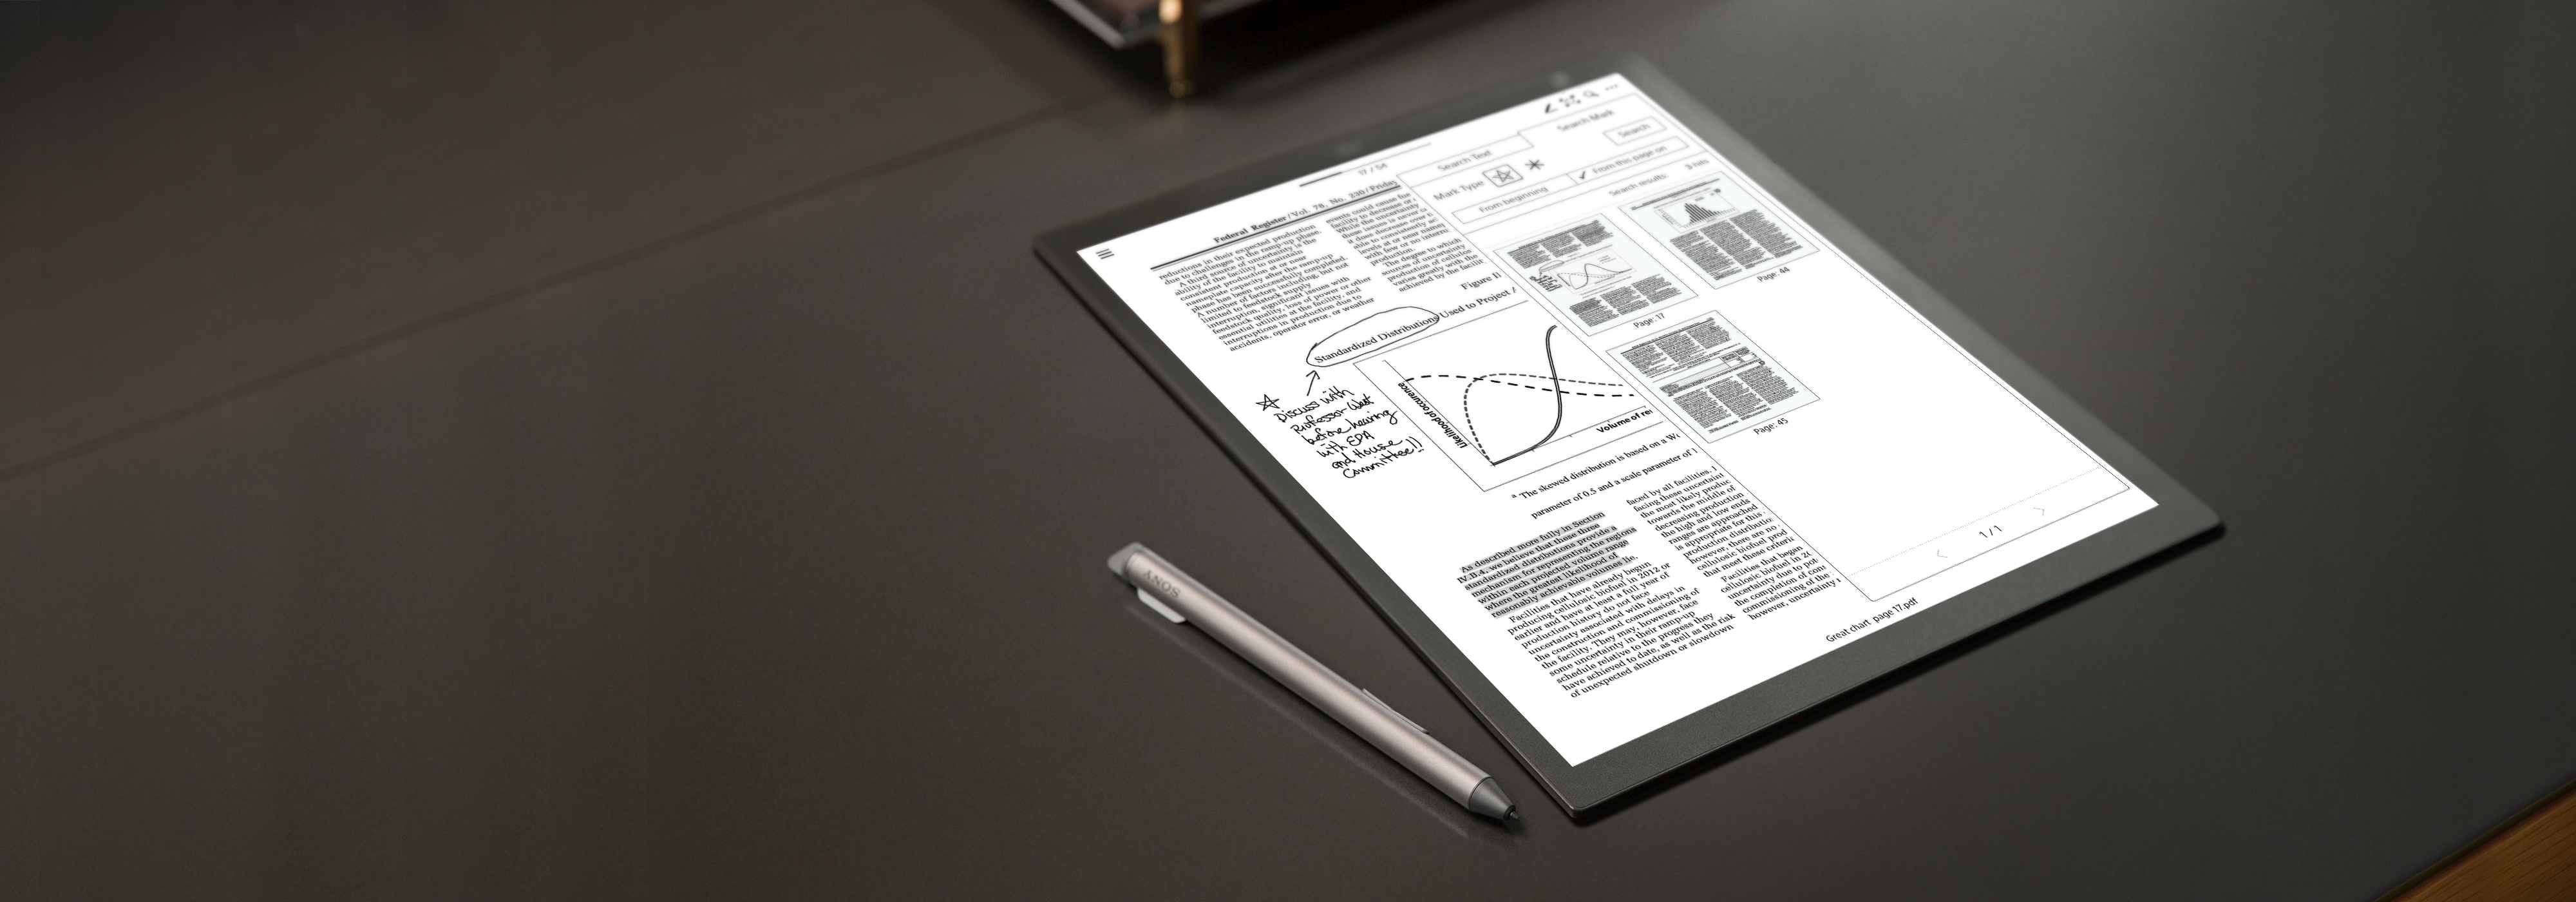 Sony Digital Paper tablet RP1 gets a major revamp